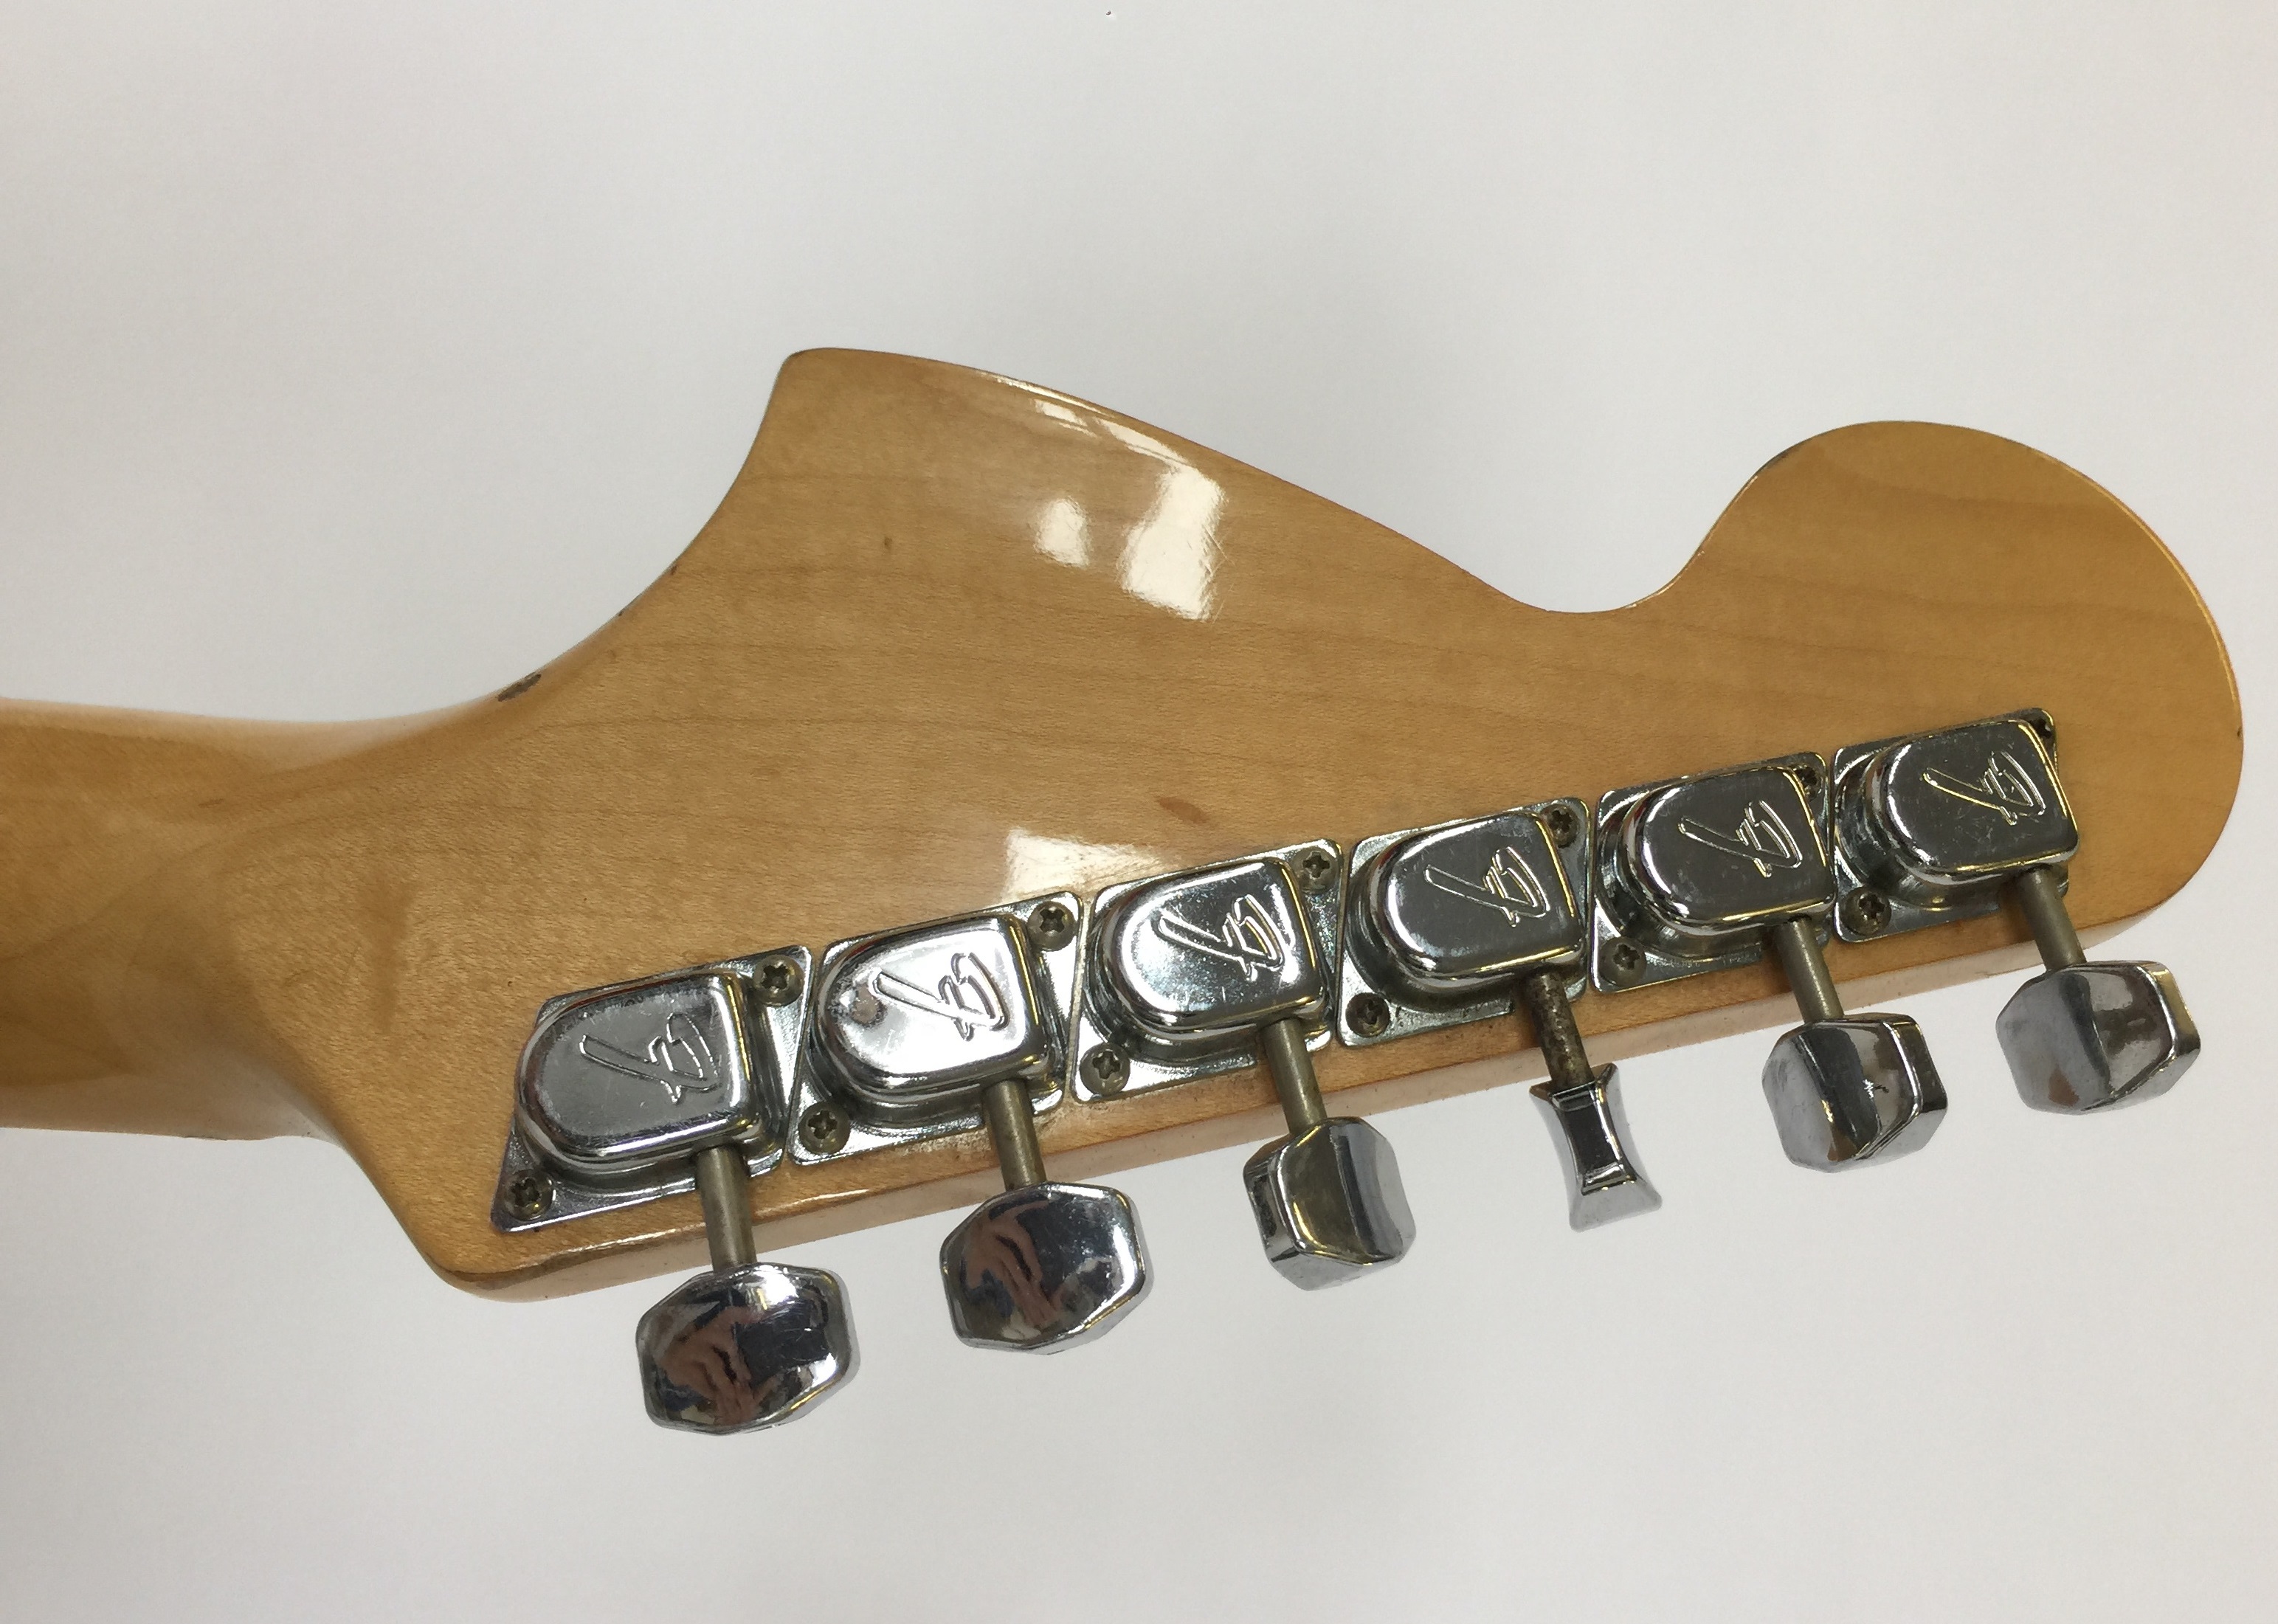 FENDER STRATOCASTER 1974 HARDTAIL - sunburst with maple neck. Serial 574552. Black Fender hard case. - Image 5 of 8